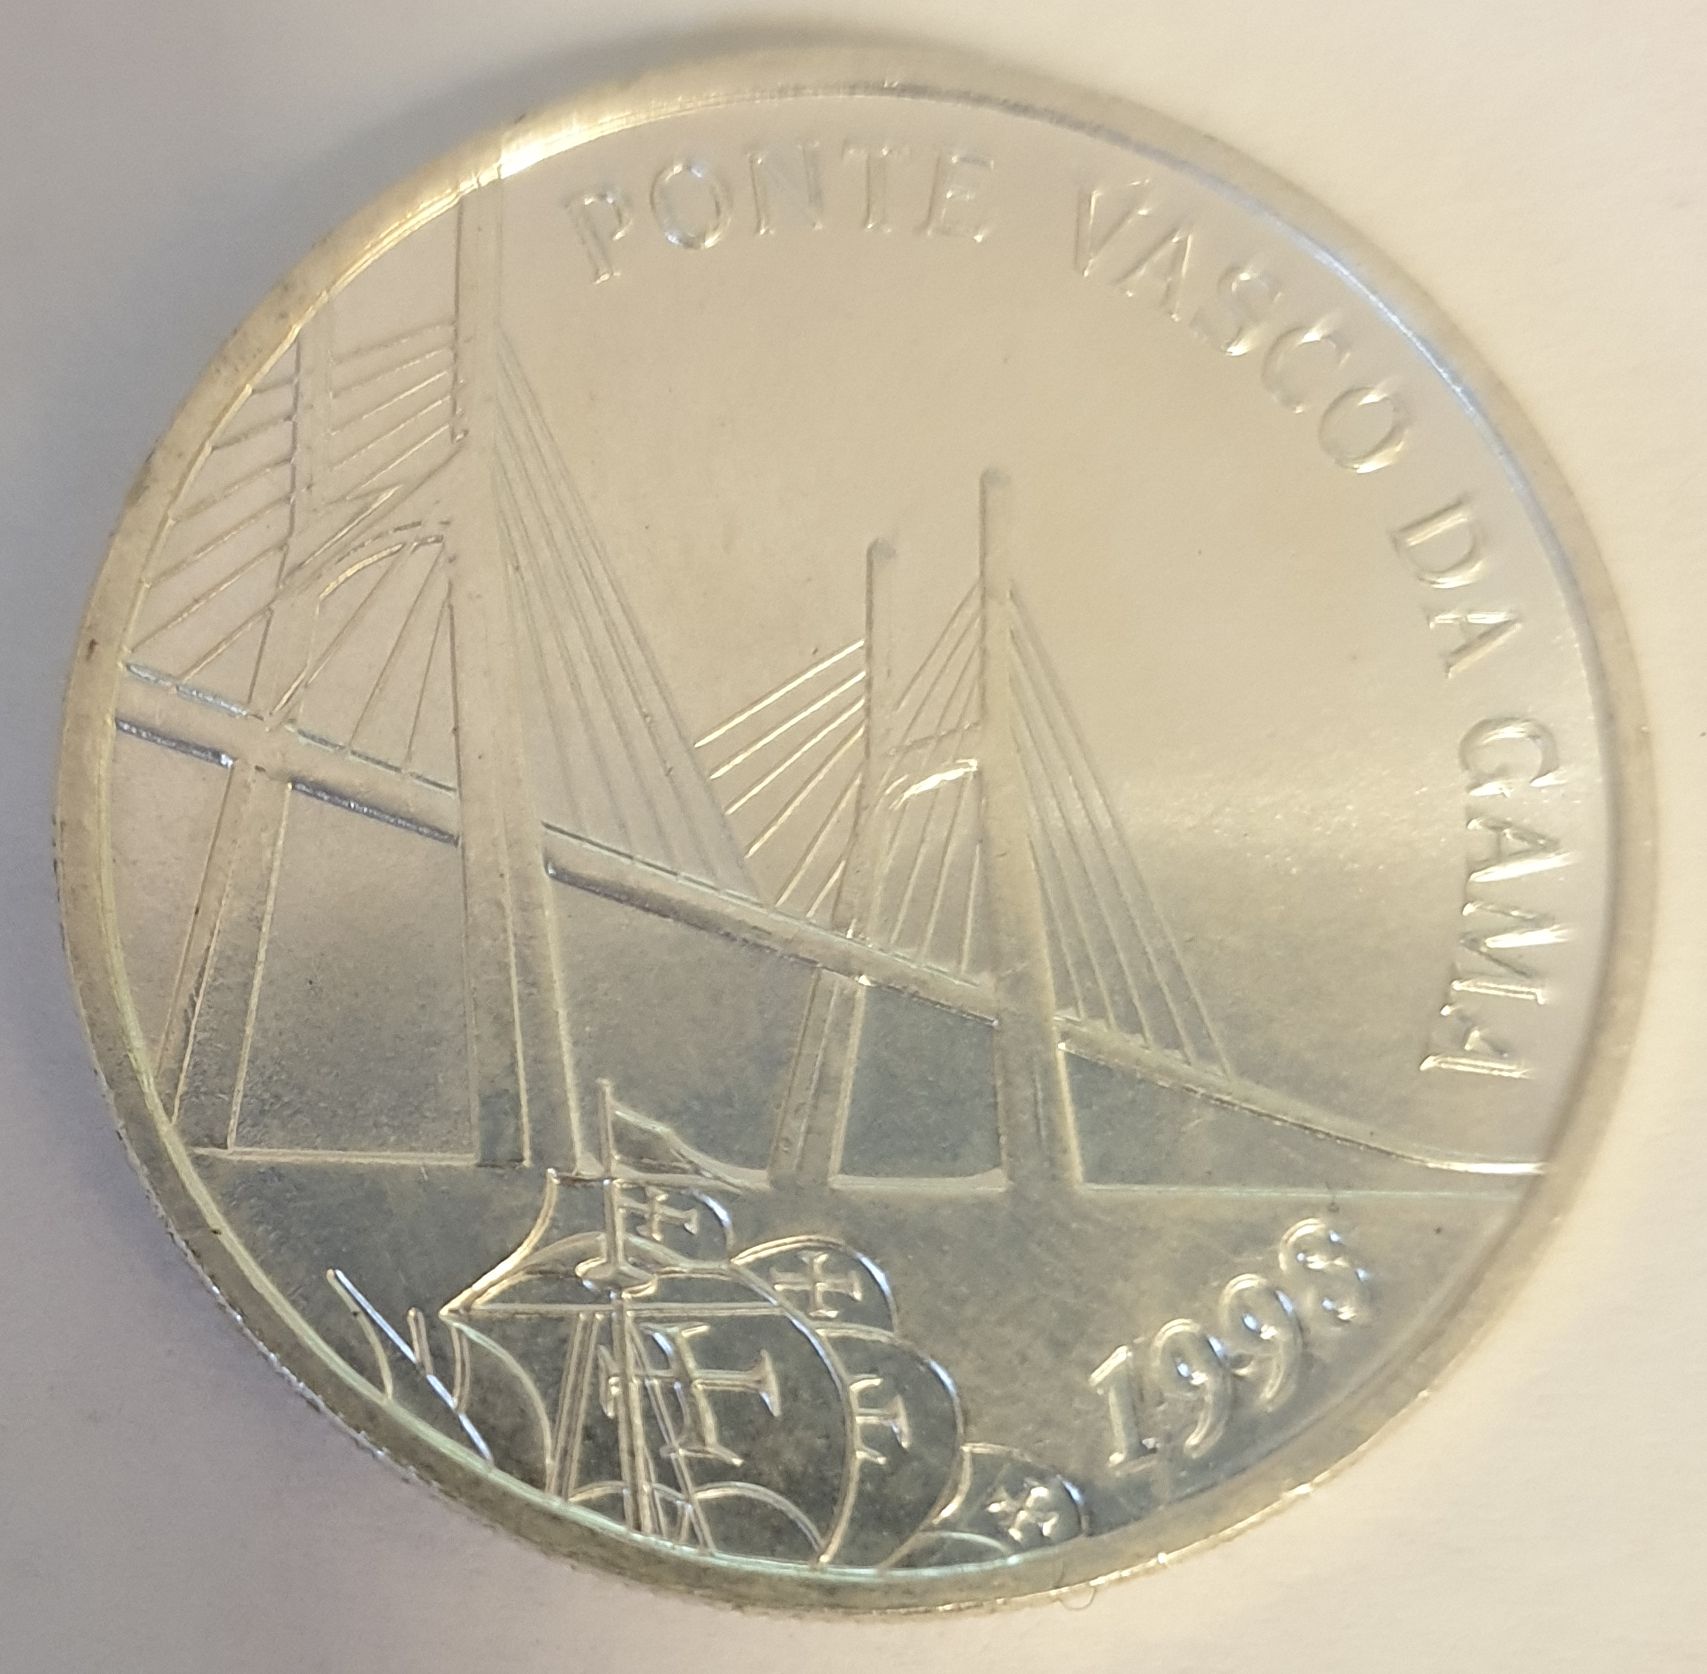 500 Escudo-Münze mit der Ponte Vasco da Gama